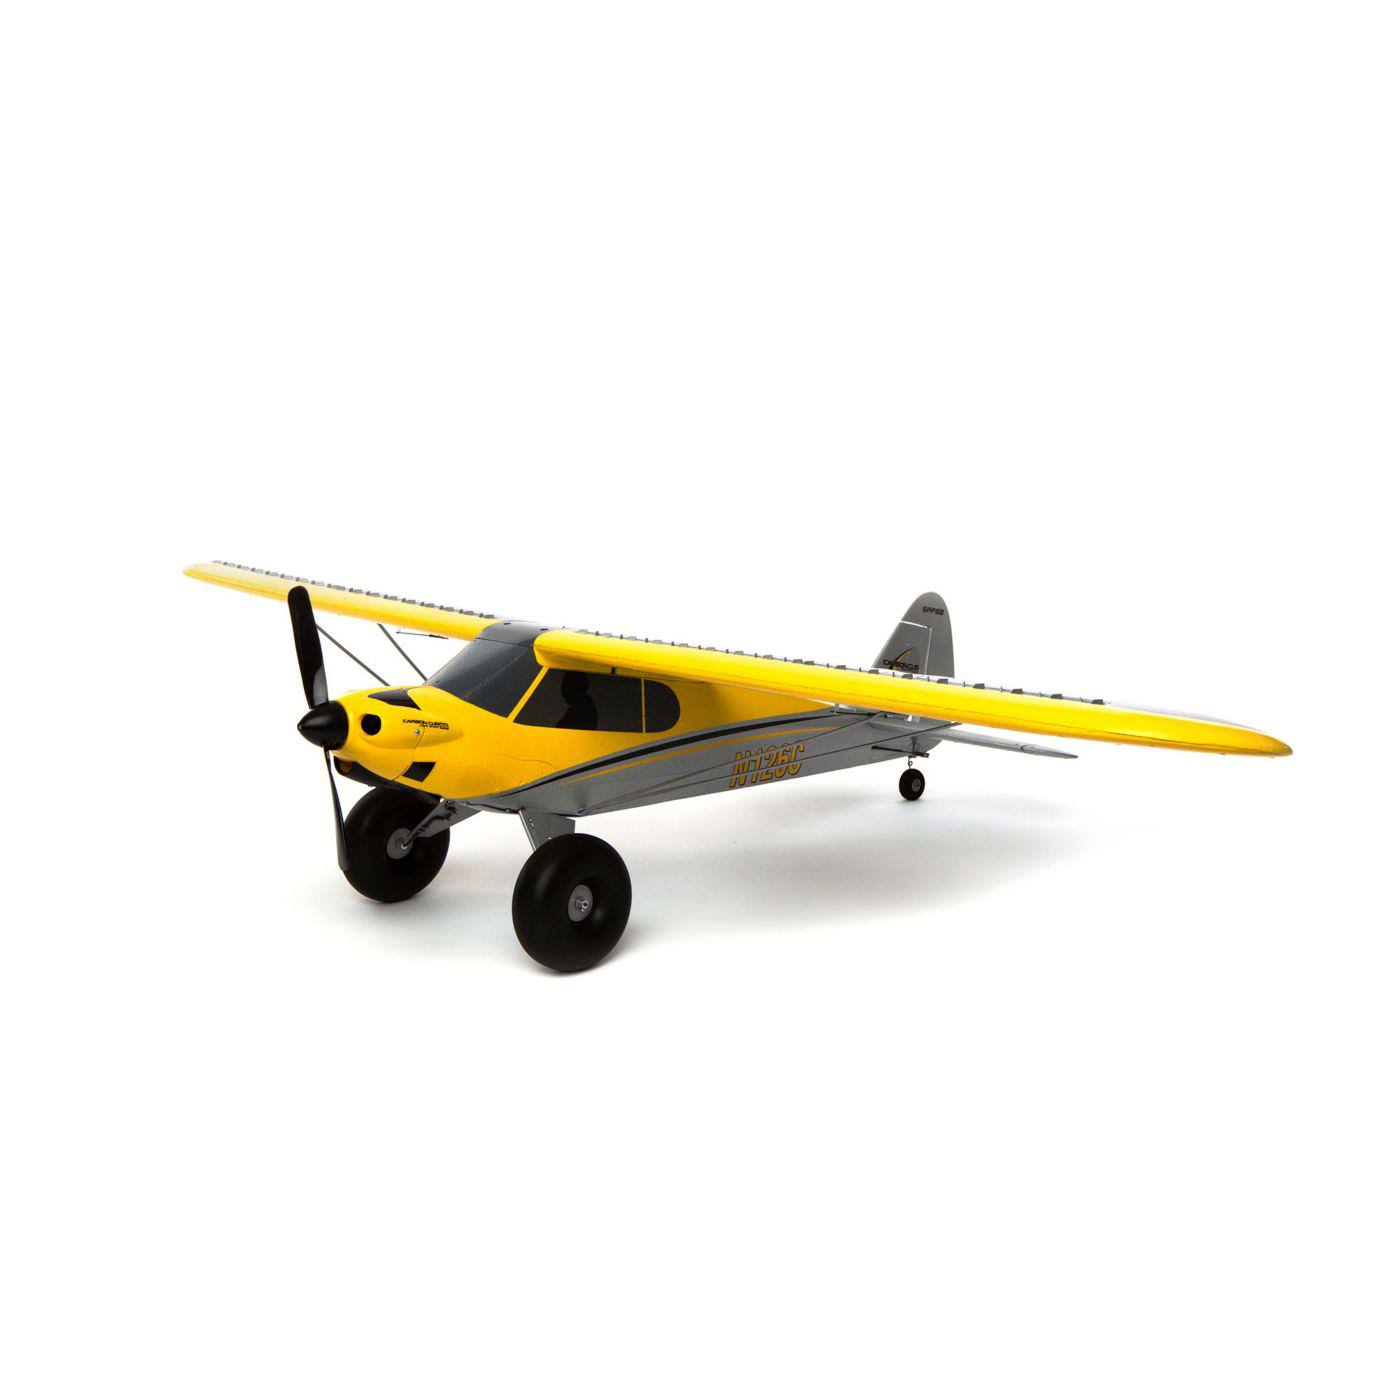 Hobbyzone Carbon Cub S2 RC Plane, RTF, Mode 2 - HBZ32000